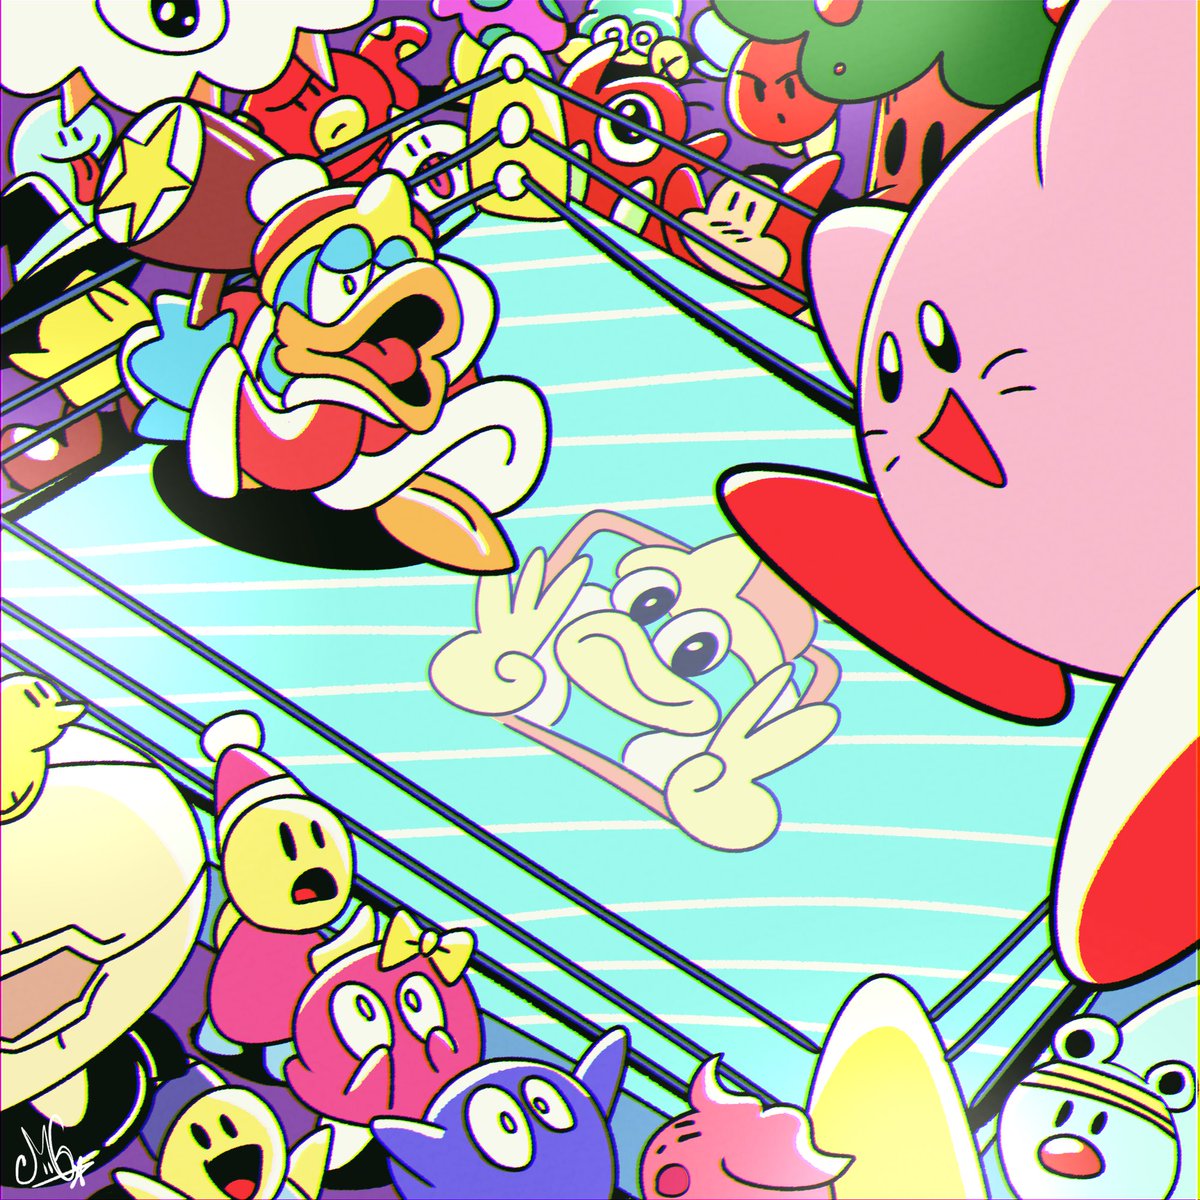 The First Rival 💥 
#星のカービィ32周年
#カービィのハッピーバースデー 
#KirbysDreamLand
#Happy32ndBirthdayKirby